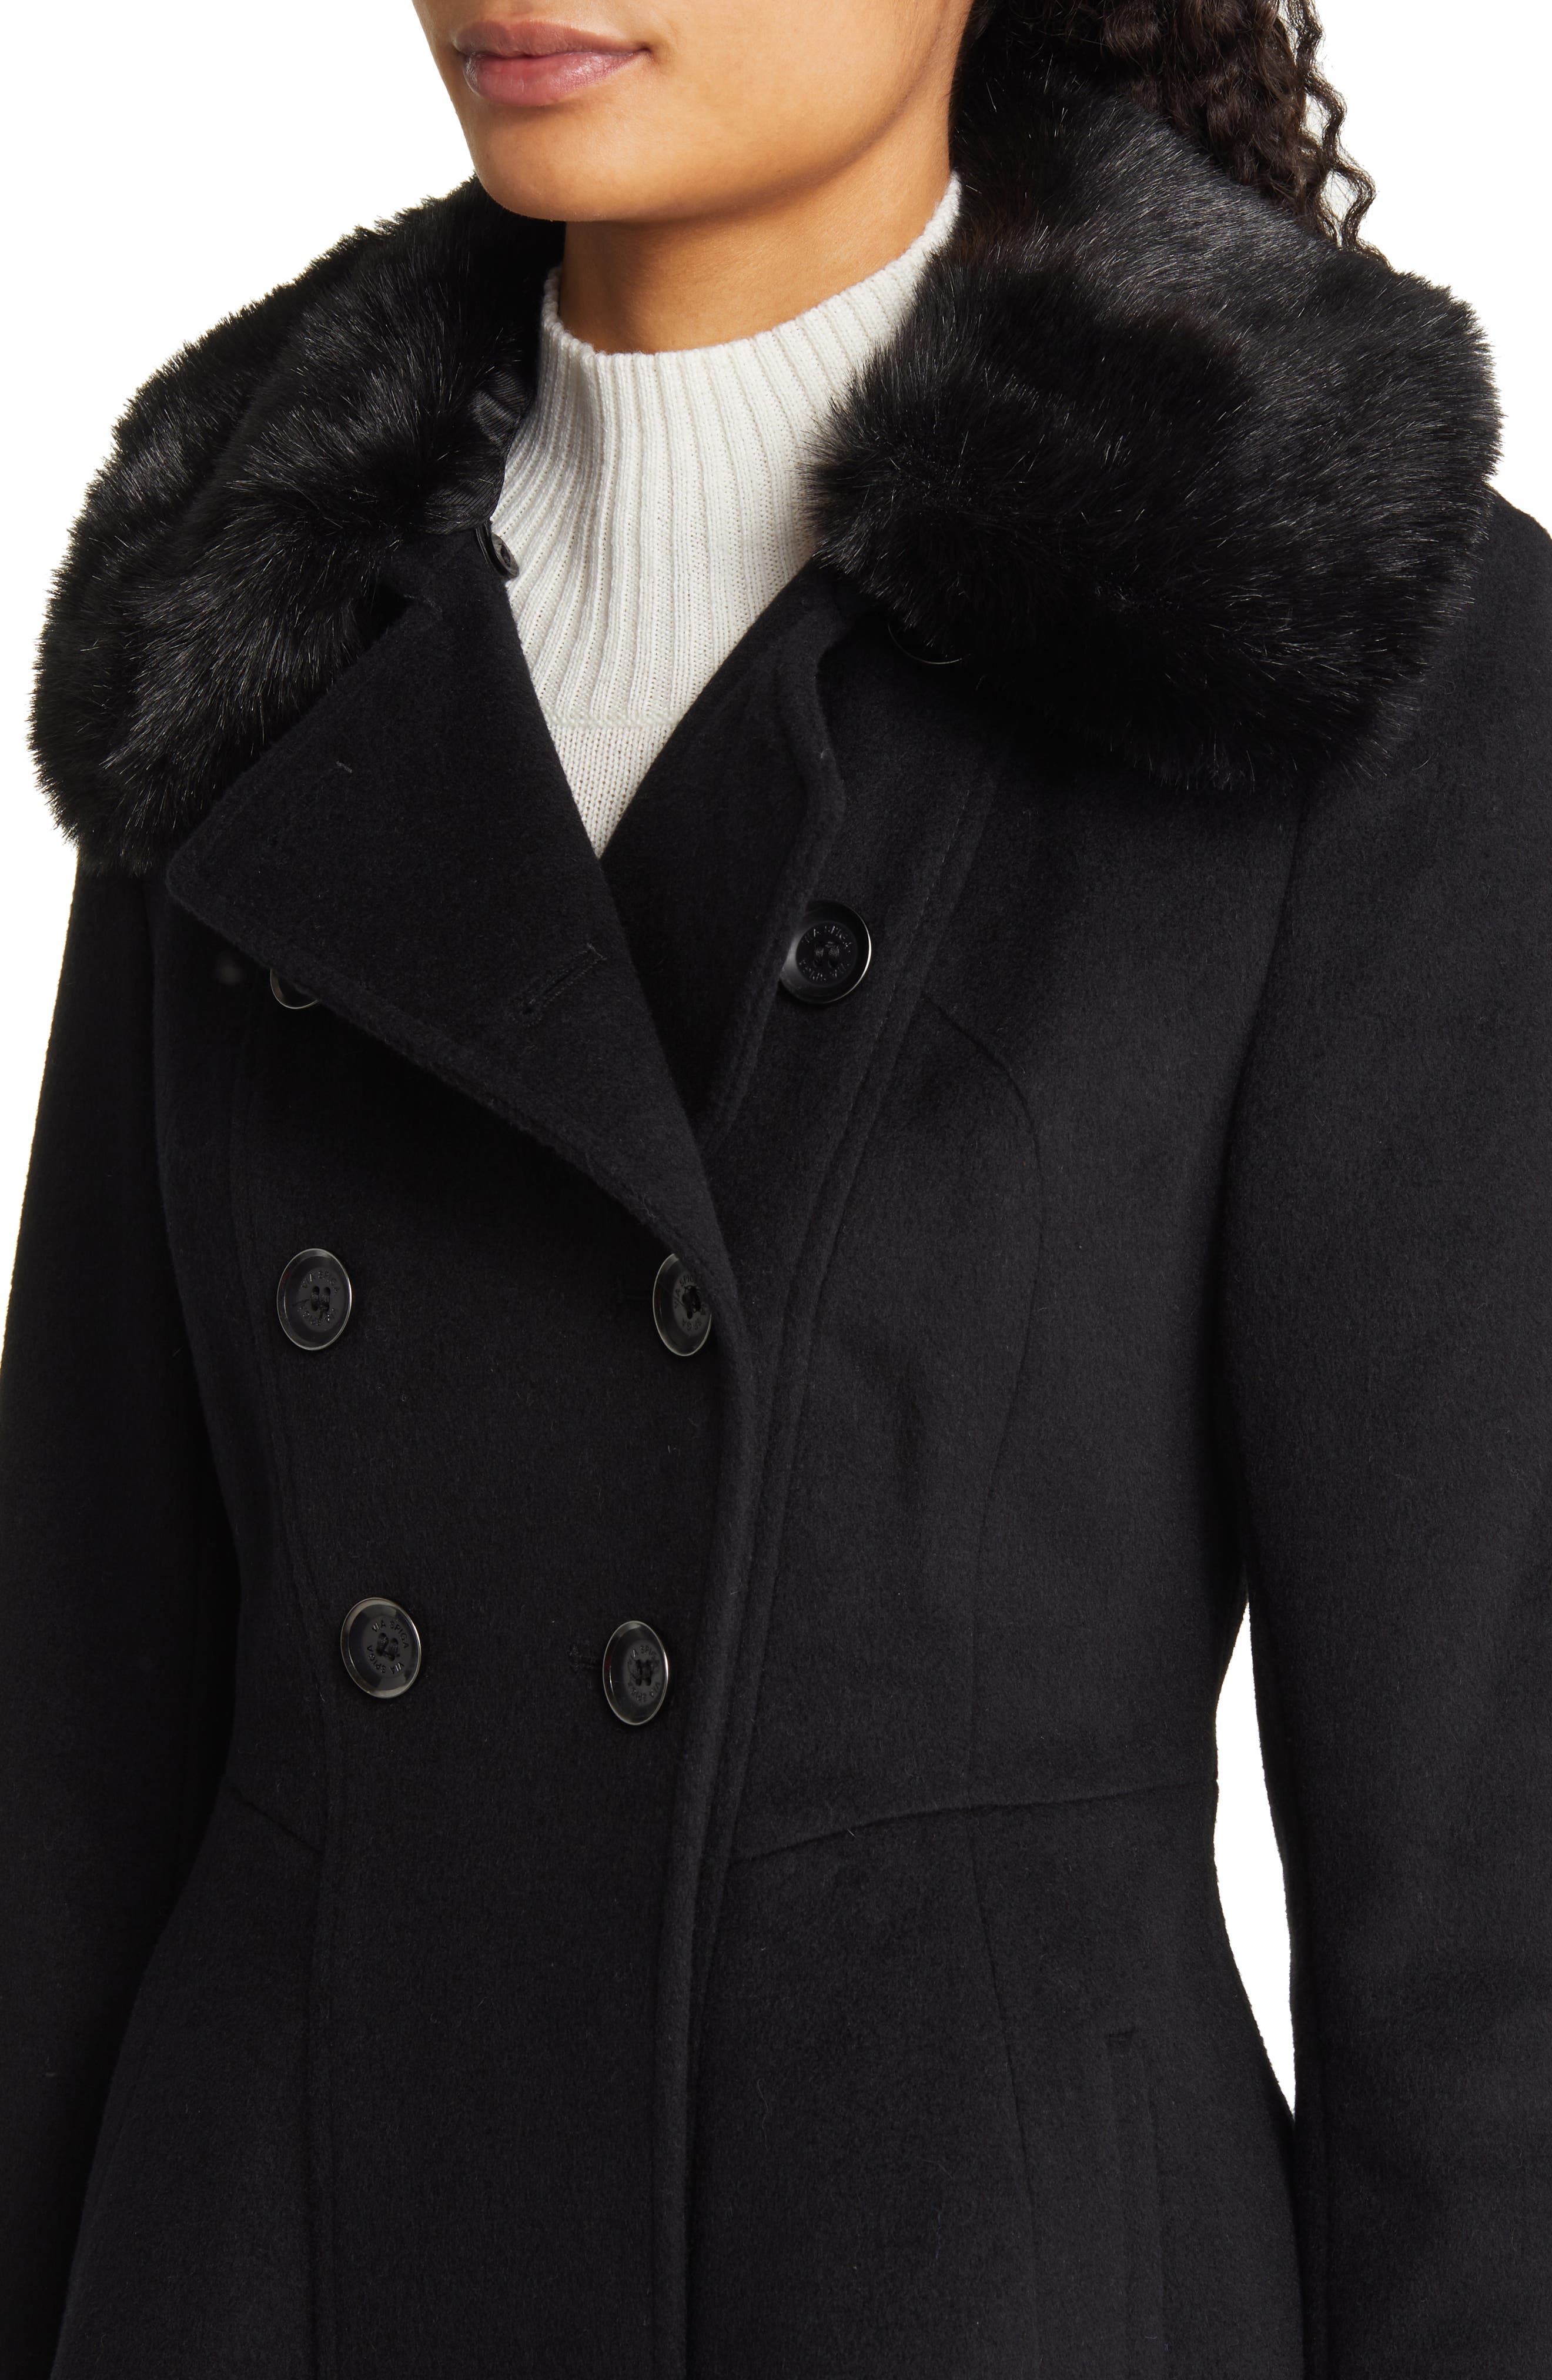 Via Spiga Women's Double Breasted Faux Fur Collar Fit 'n Flare Coat Black  Sz.10